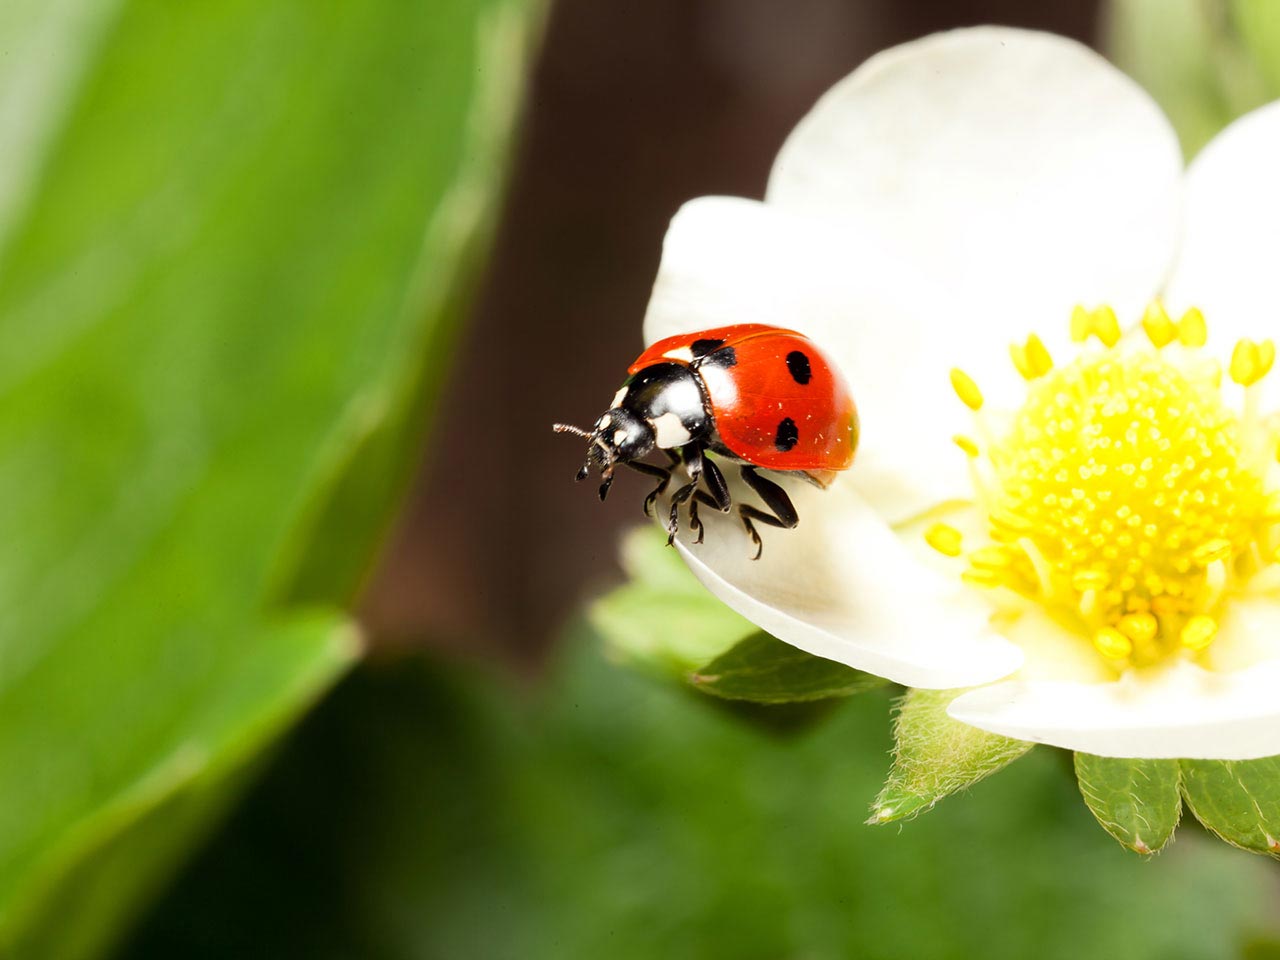 A ladybird, a predator of aphids